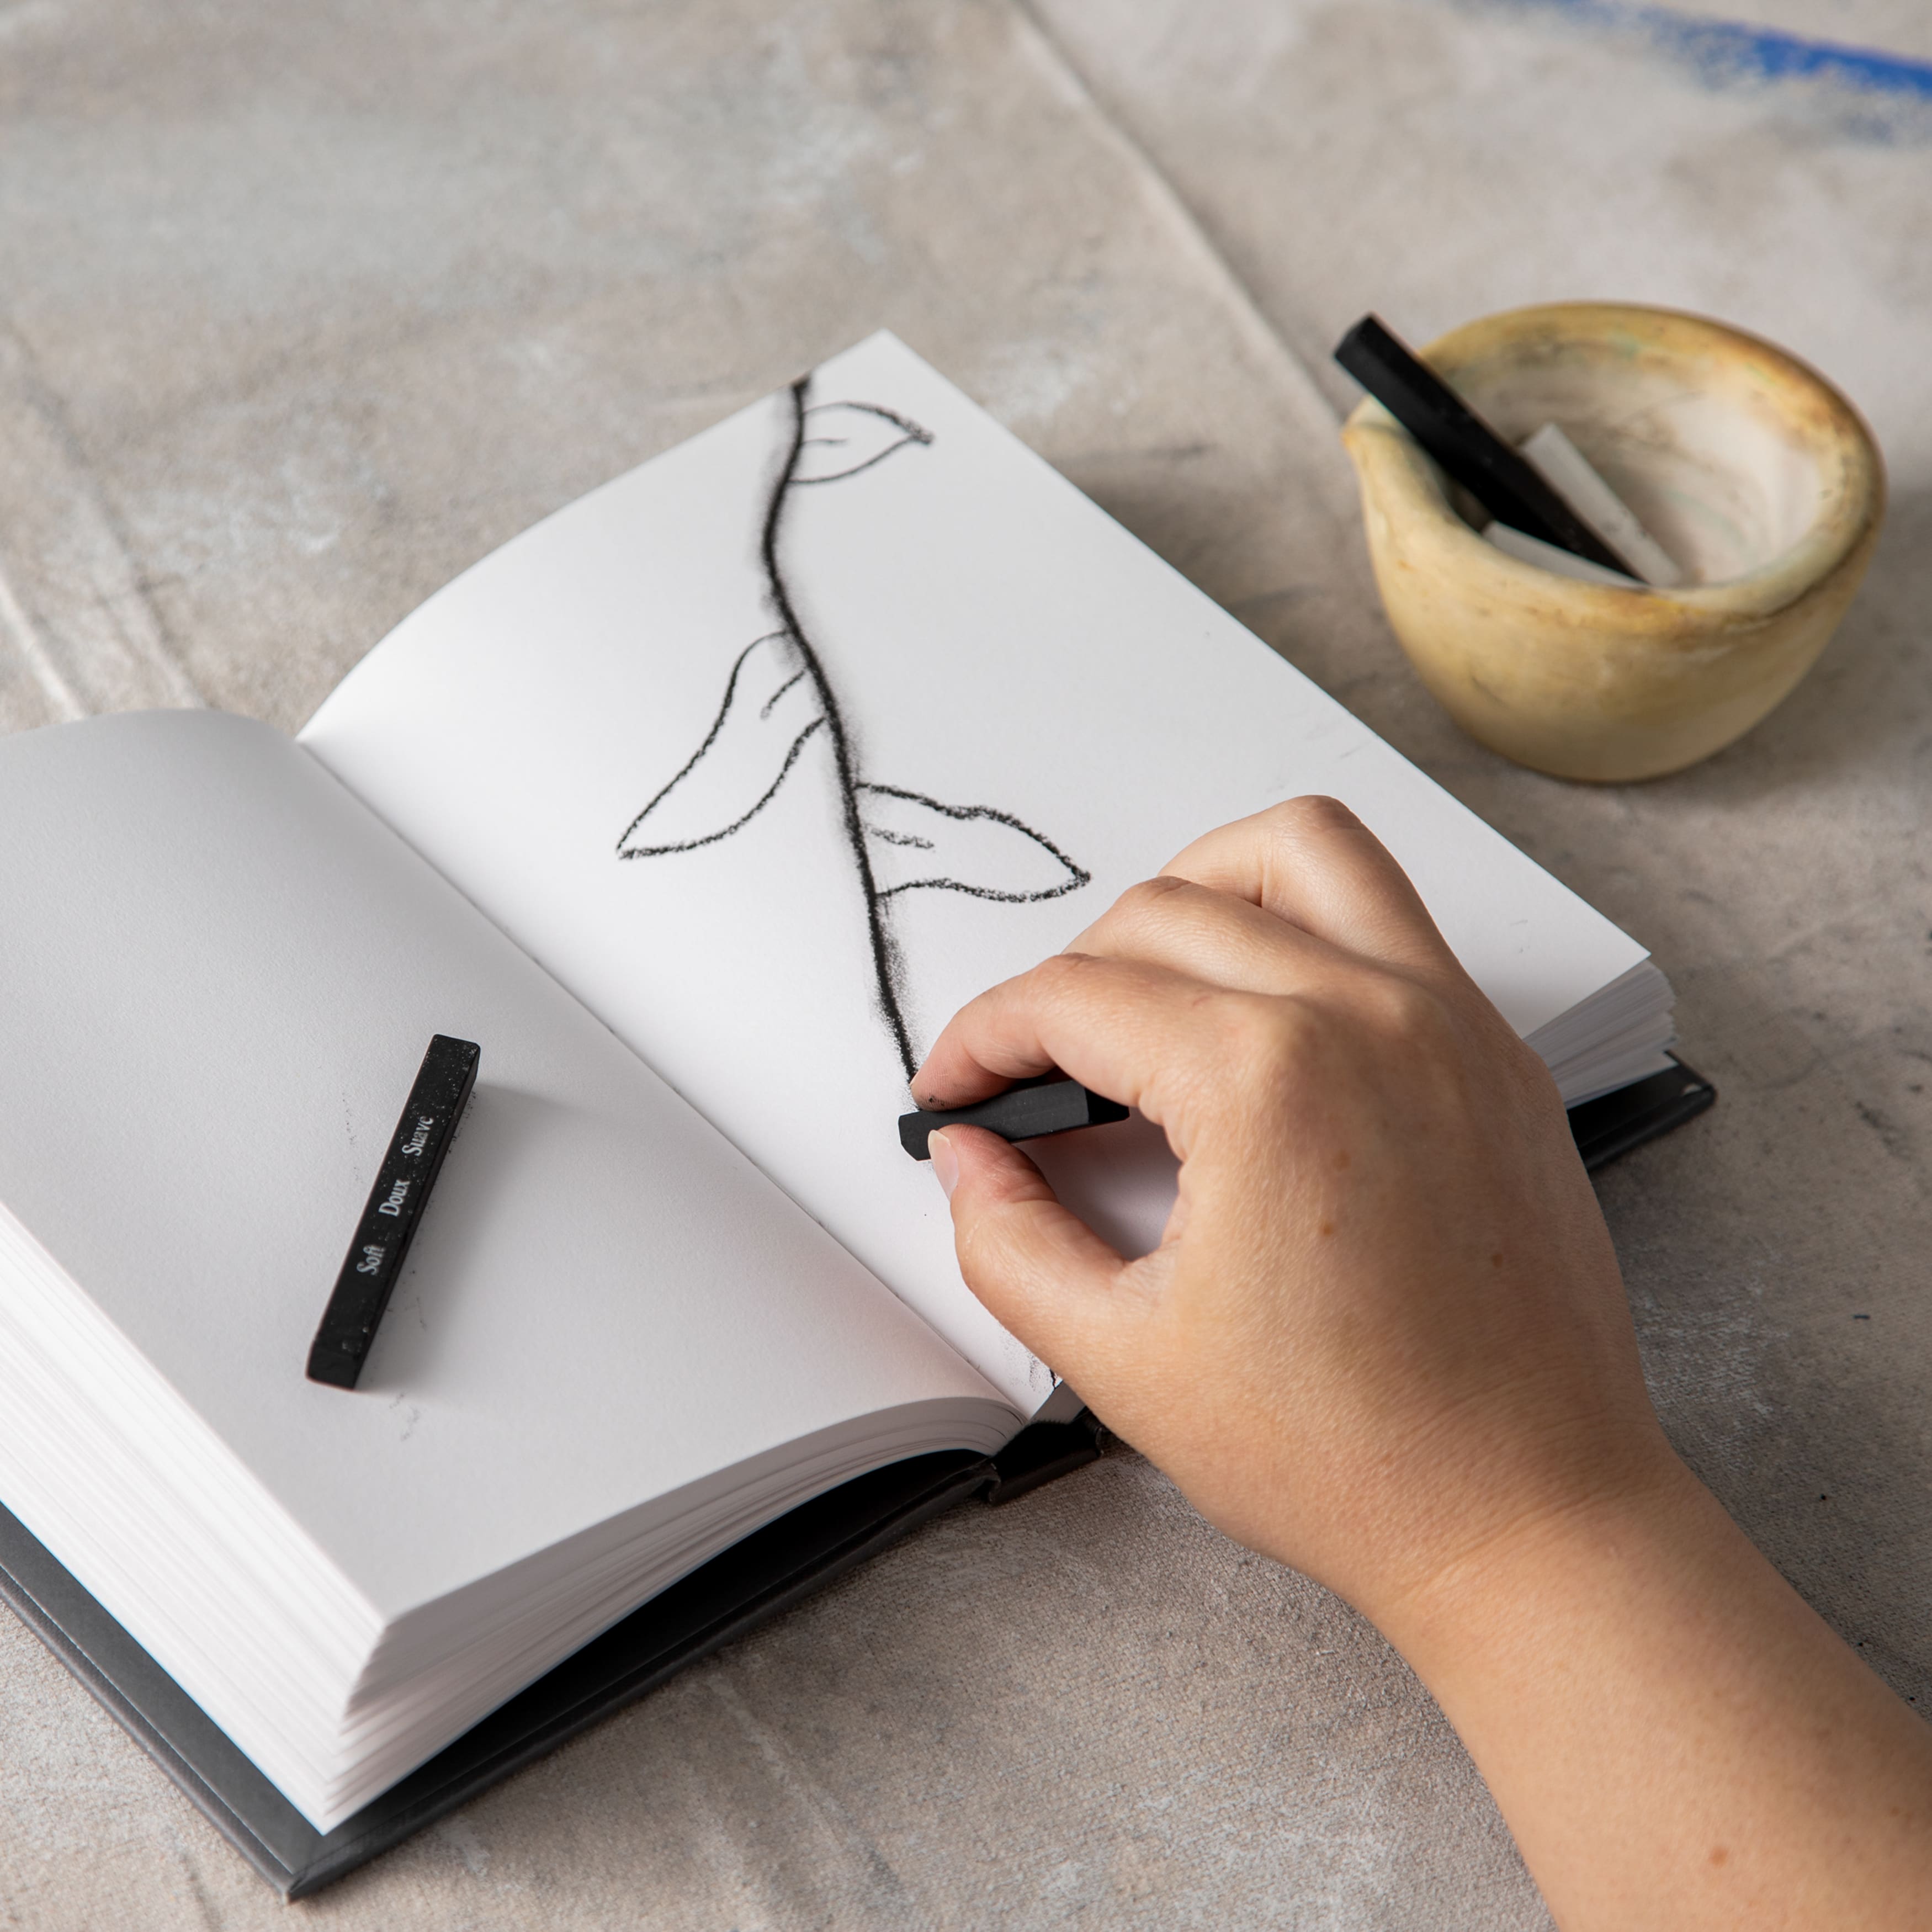 12 Pack: Gray Hardcover Sketchbook by Artist's Loft™, 8.5 x 11